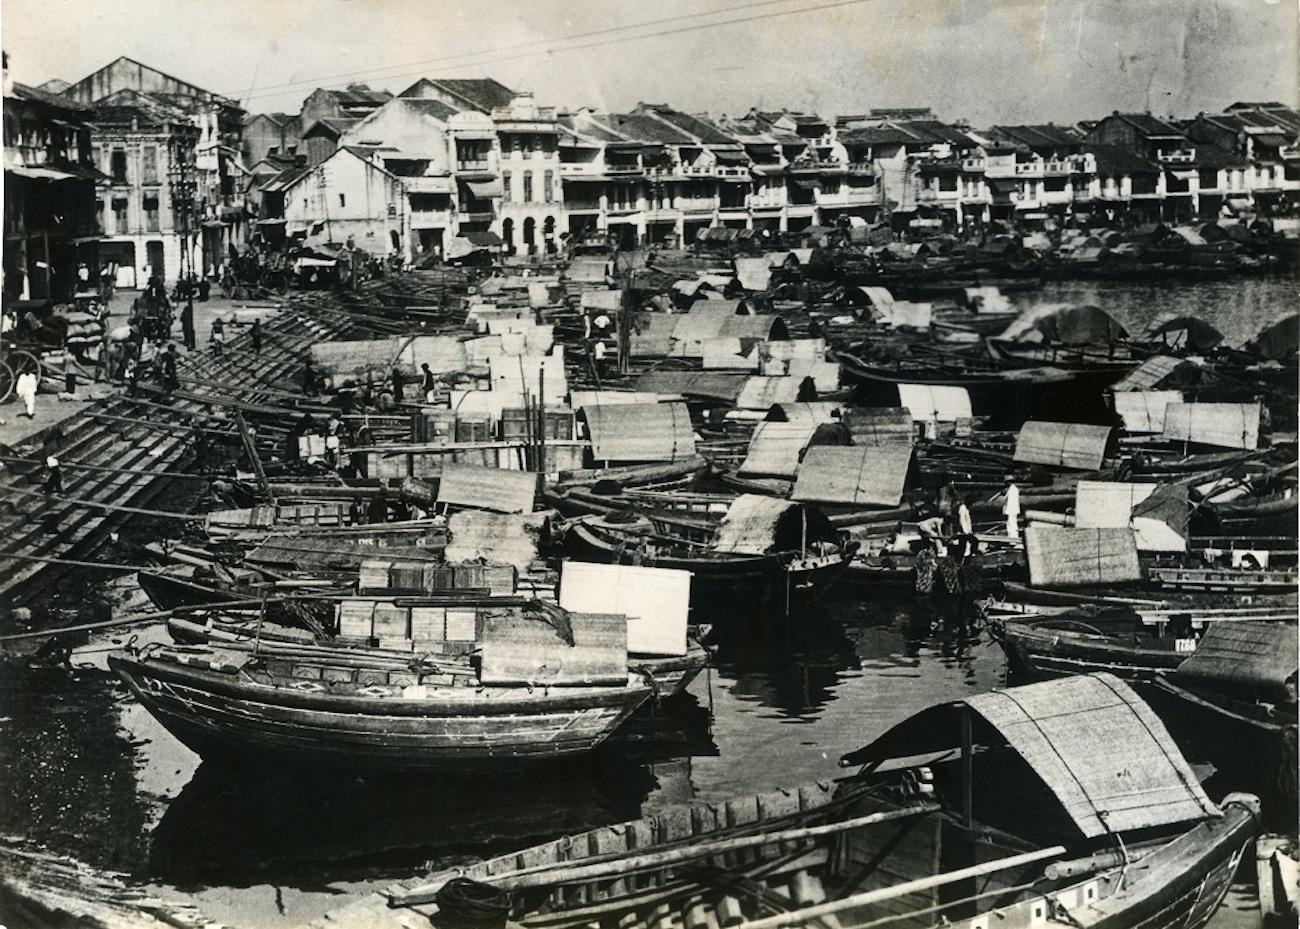 Unknown Landscape Photograph - View of the Ancient Port of Singapore - Vintage Photo 1930s